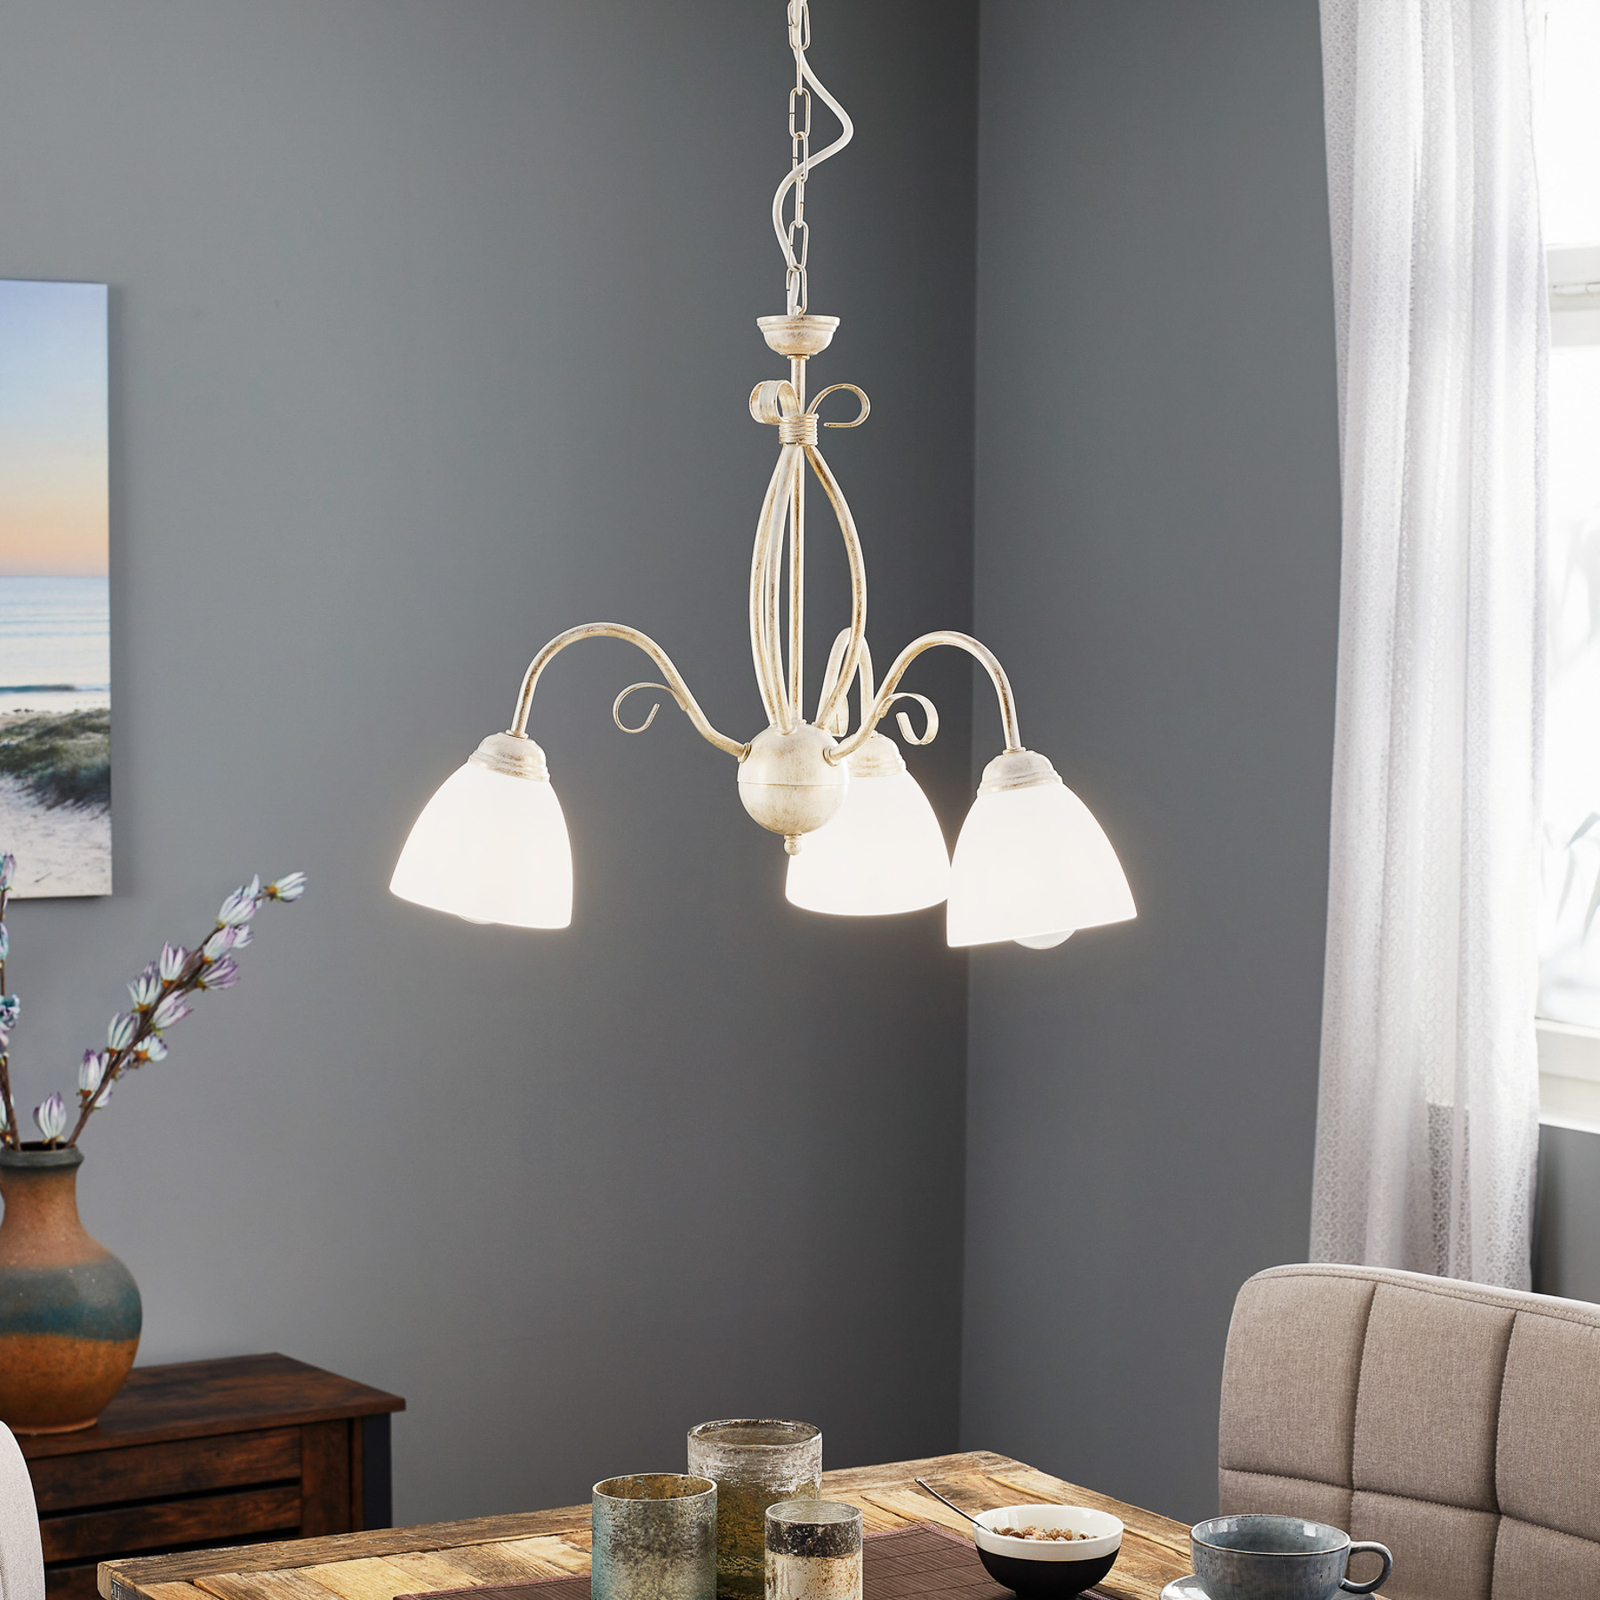 Hanglamp Adoro, 3-lamps, wit